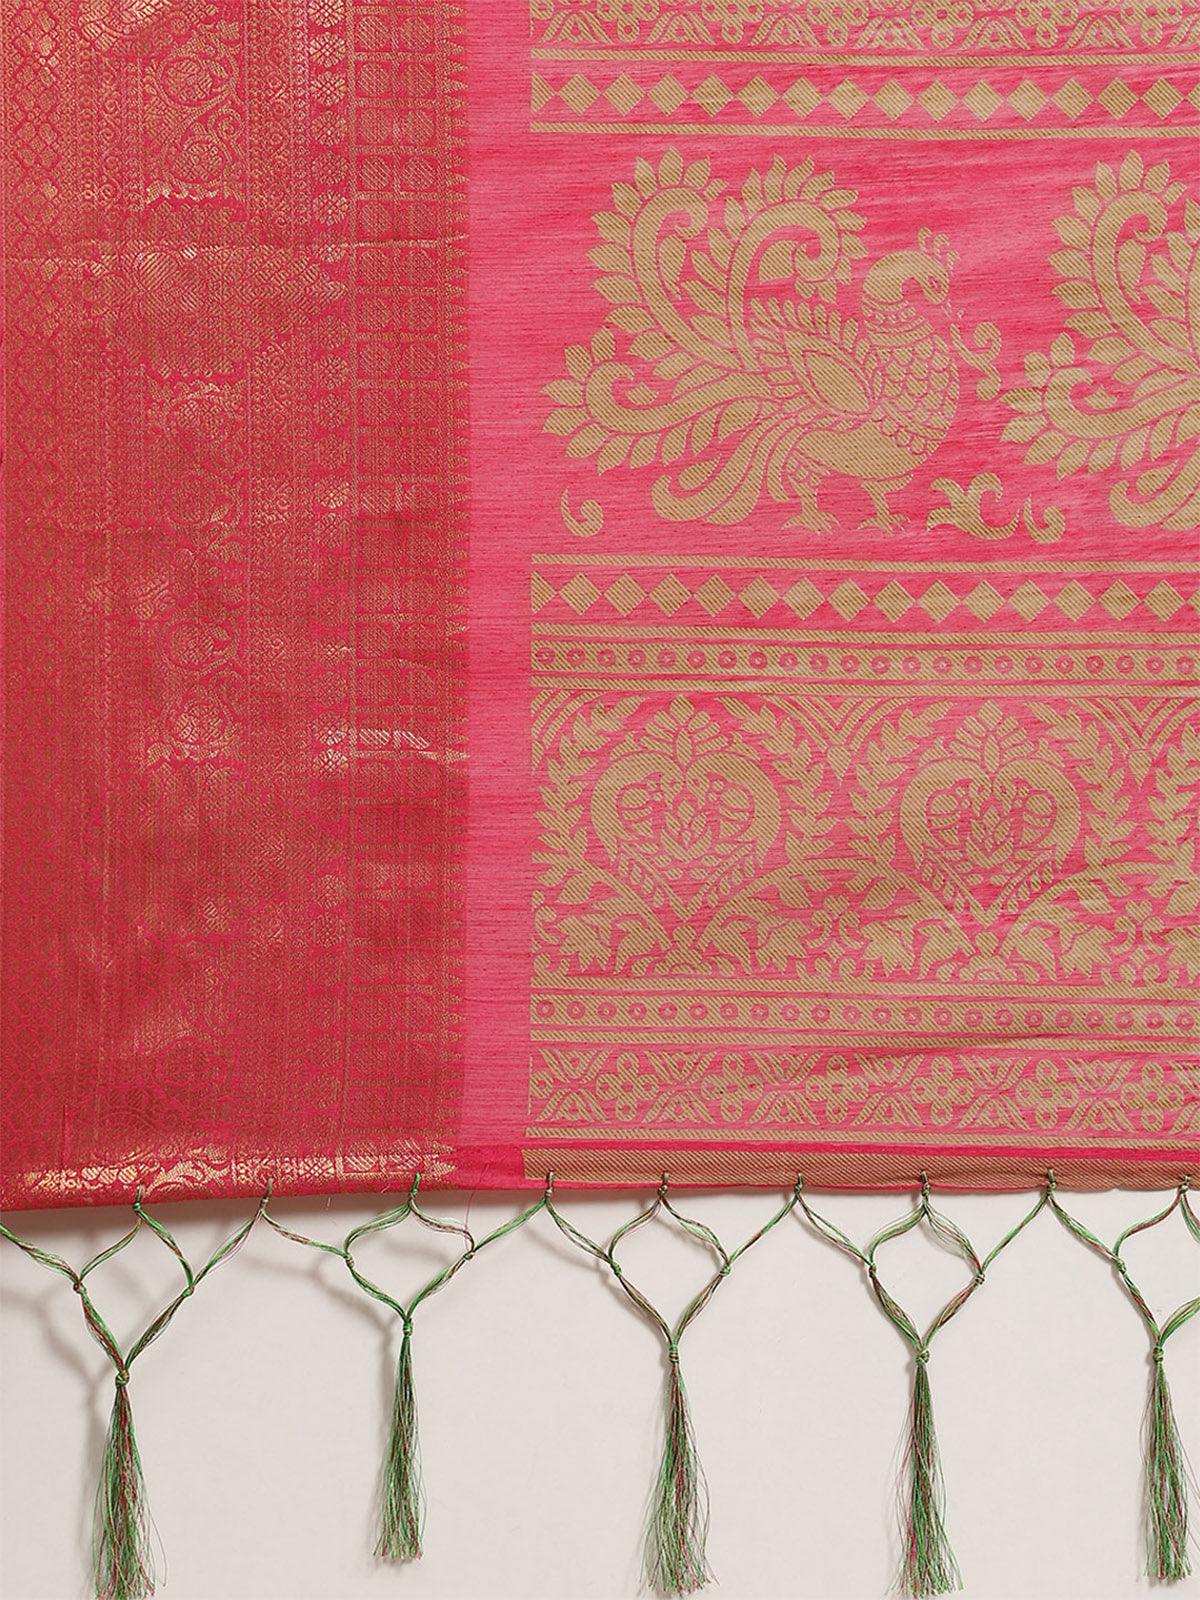 Women's Cotton Blend Green Printed Designer Saree With Blouse Piece - Odette